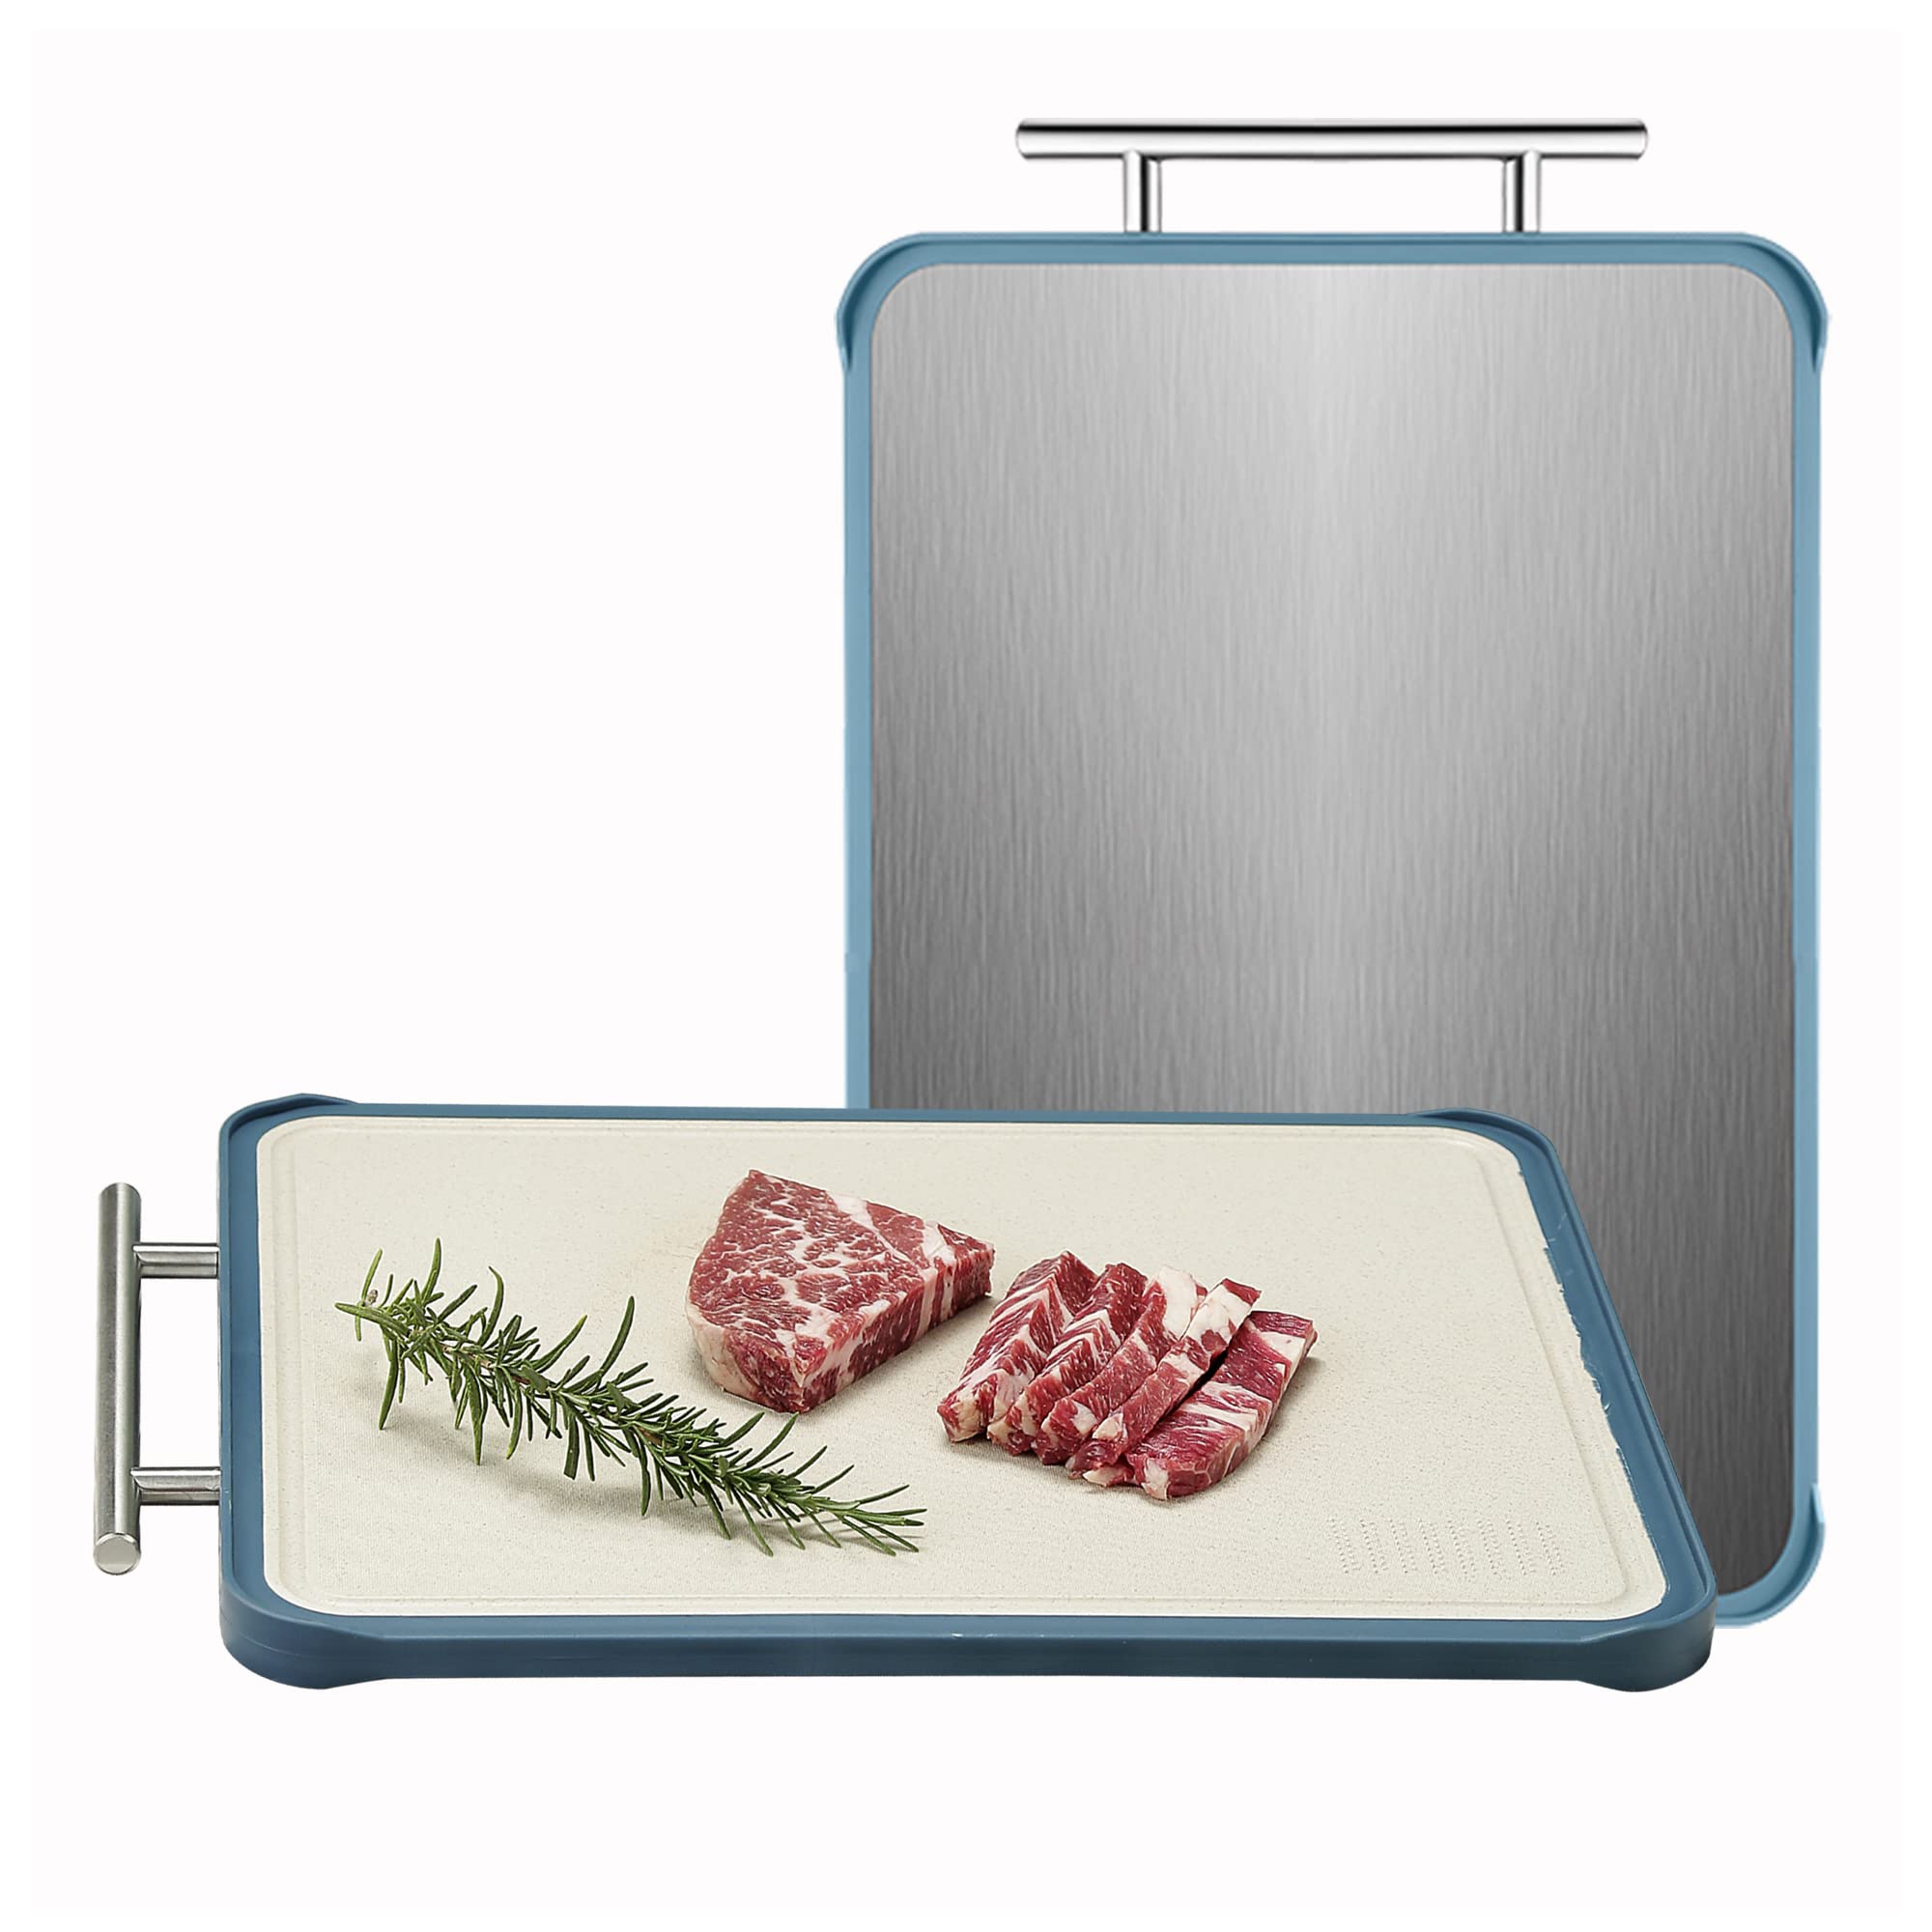 LIGTSPCE Double-Sided Meat Cutting Board